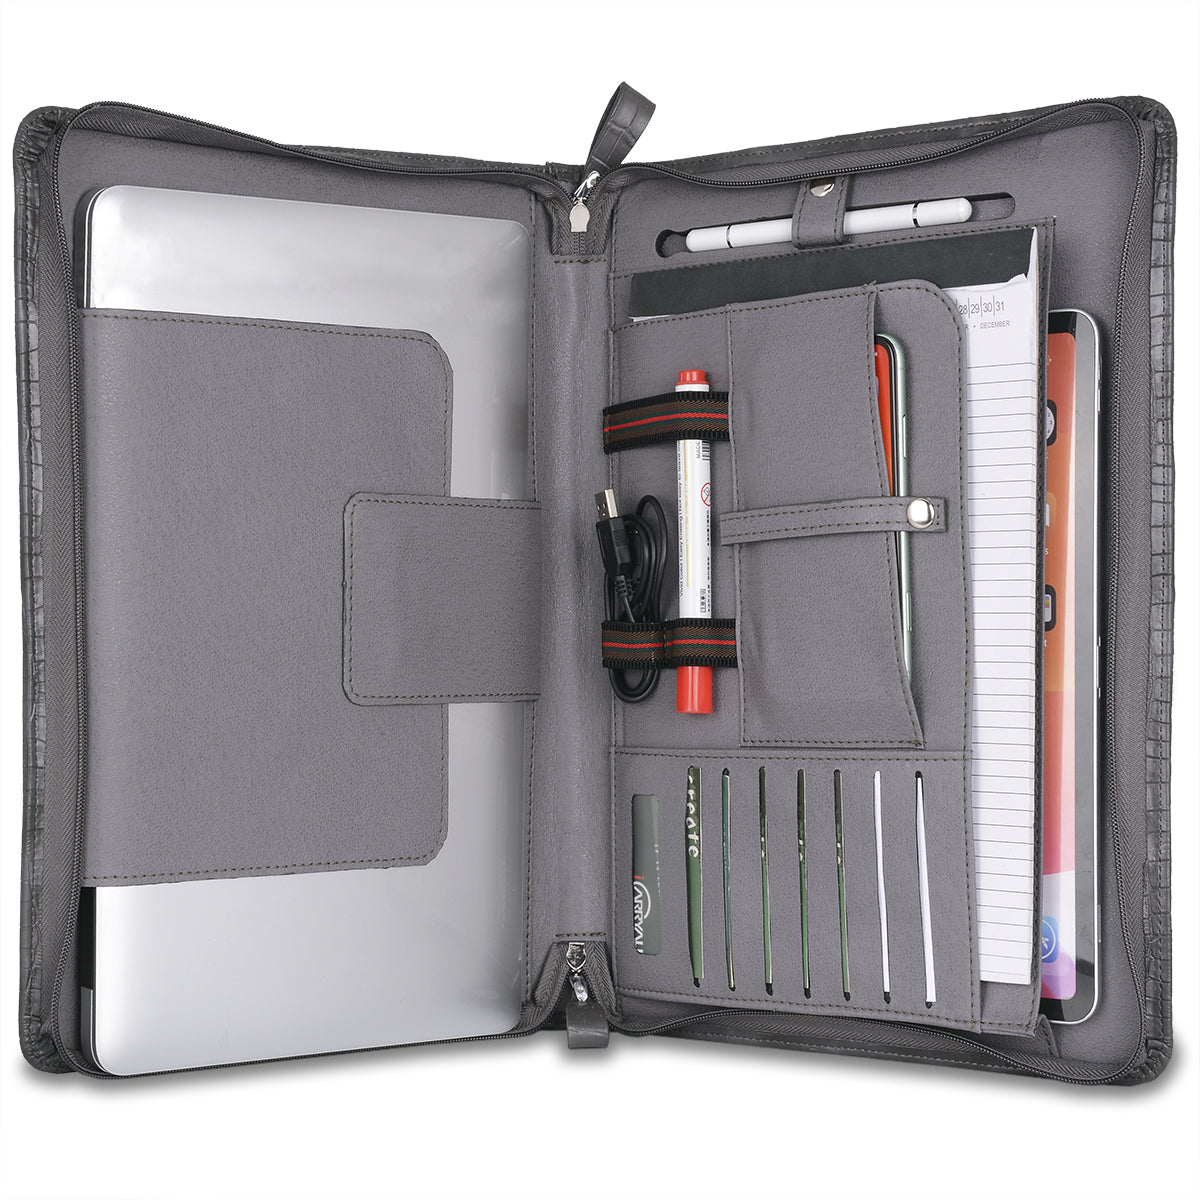 iCarryAlls Laptop Portfolio Organizer Case for Surface Book 2 /MacBook Pro 15 inch, MacBook Laptop Folio Case with Organizer Pocket, Black